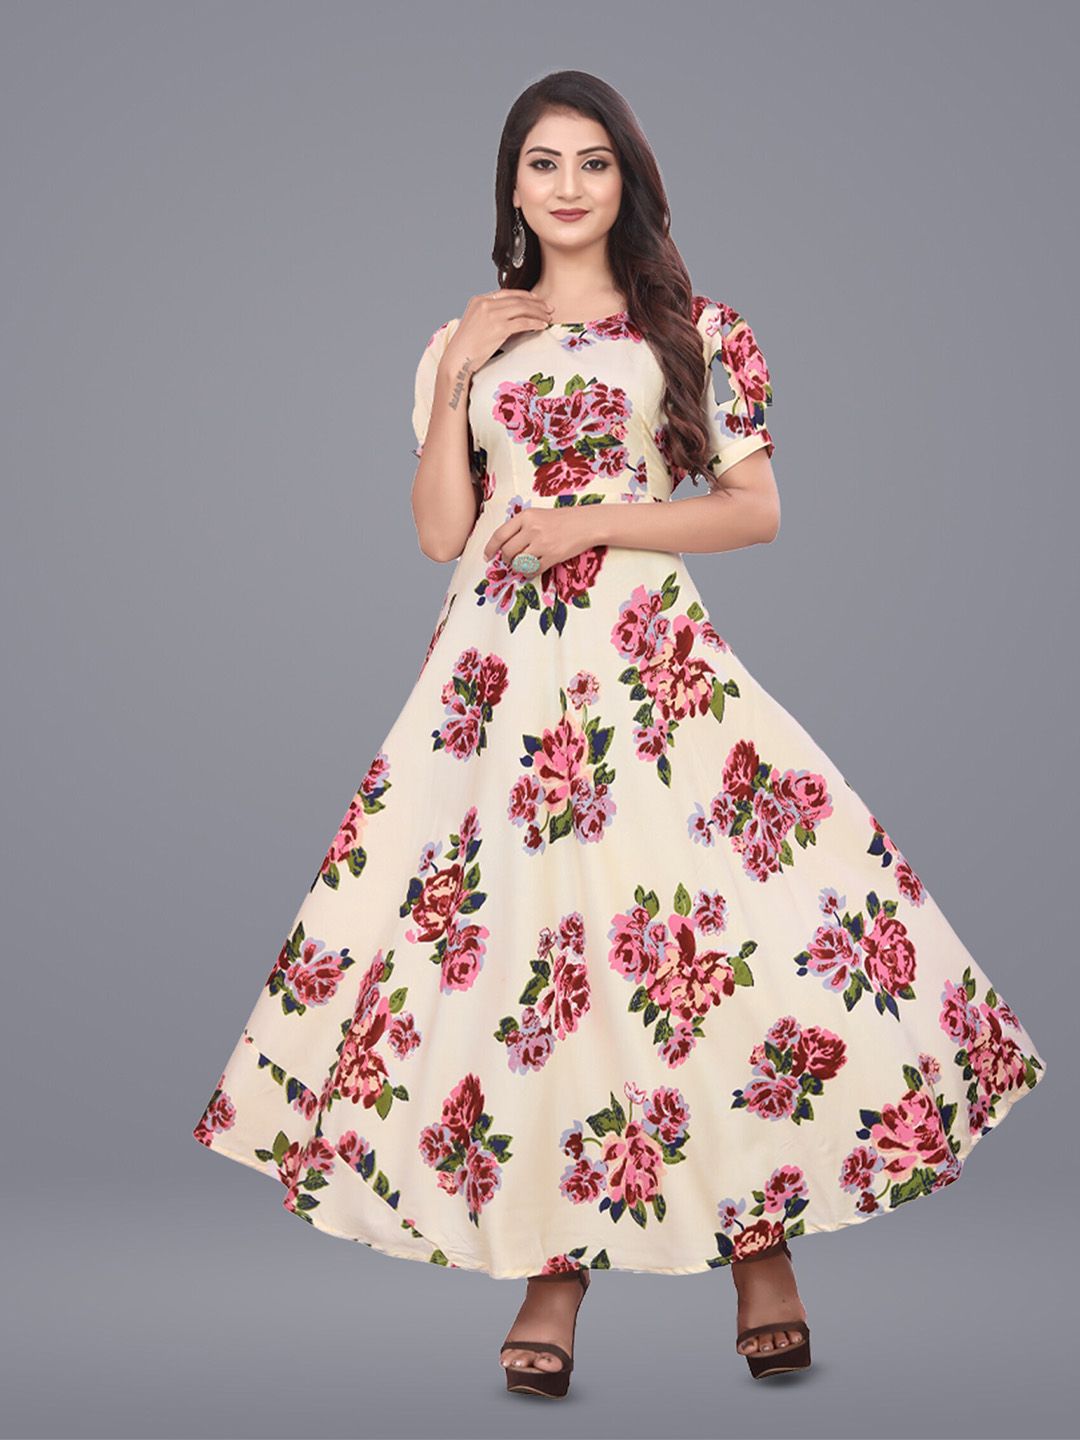 N N ENTERPRISE Floral Printed Puff Sleeves Fit and Flare Dress Price in India